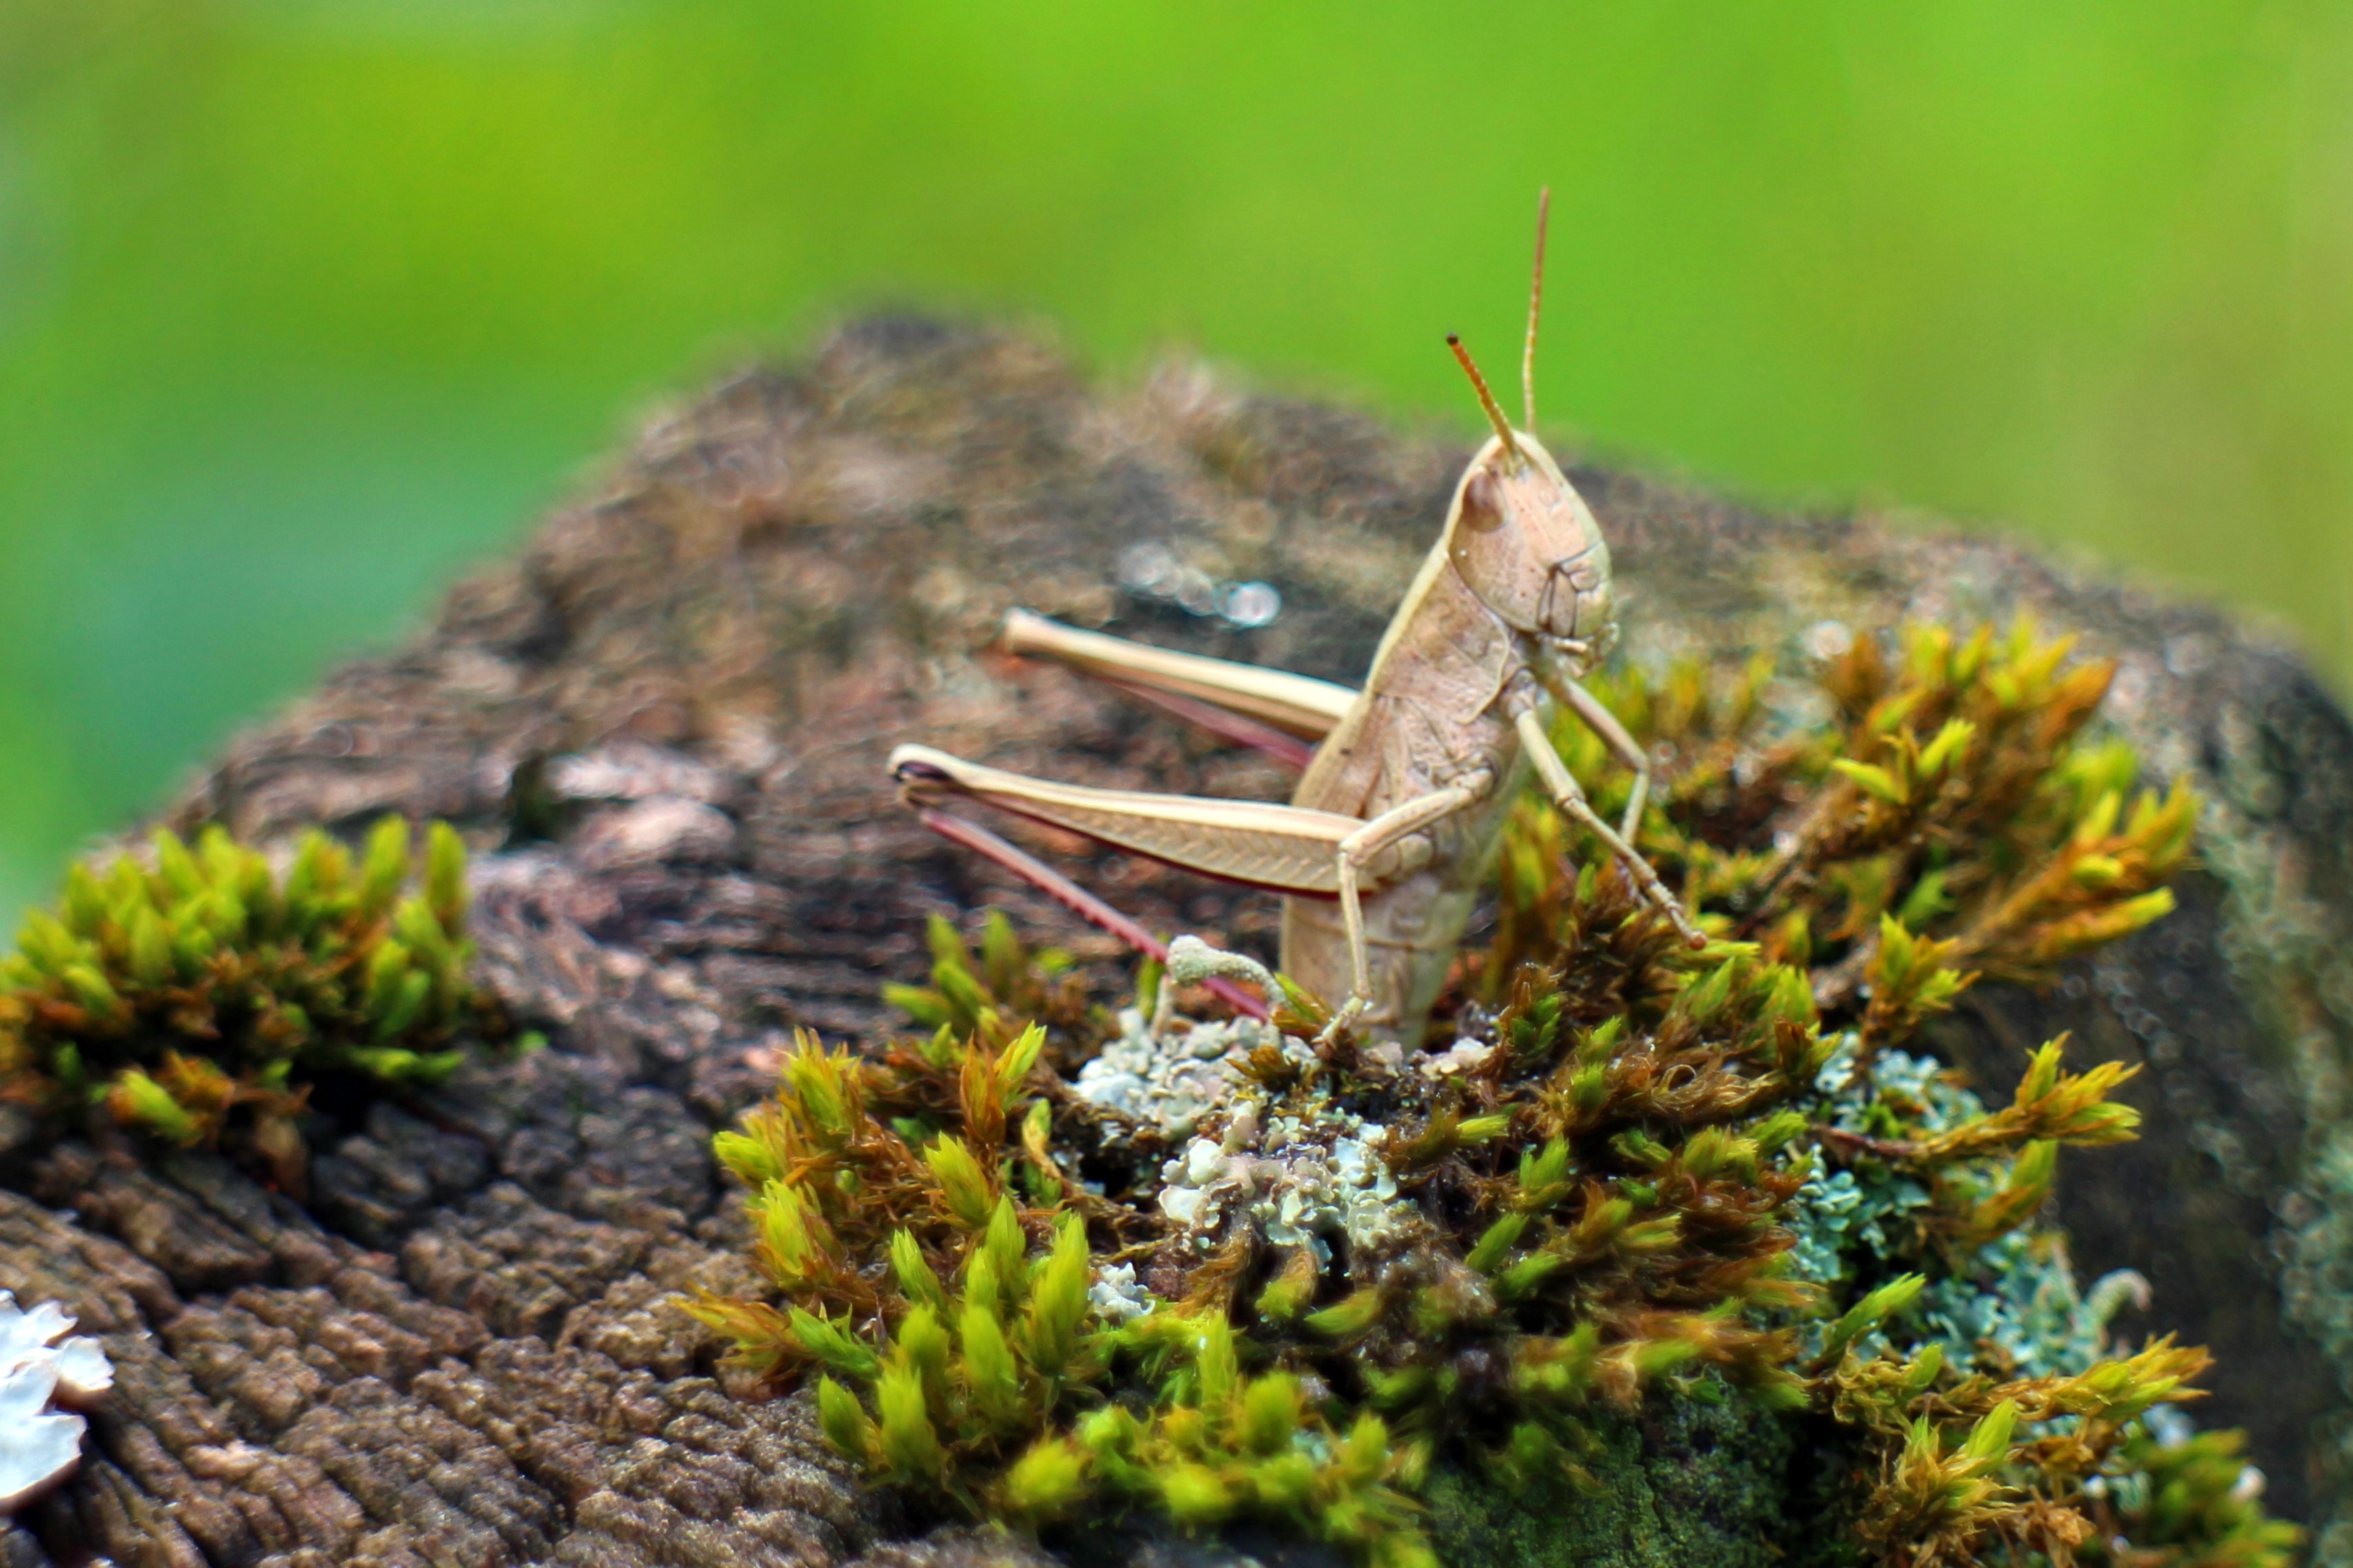 Caelifera, Grasshopper, one animal, animal themes